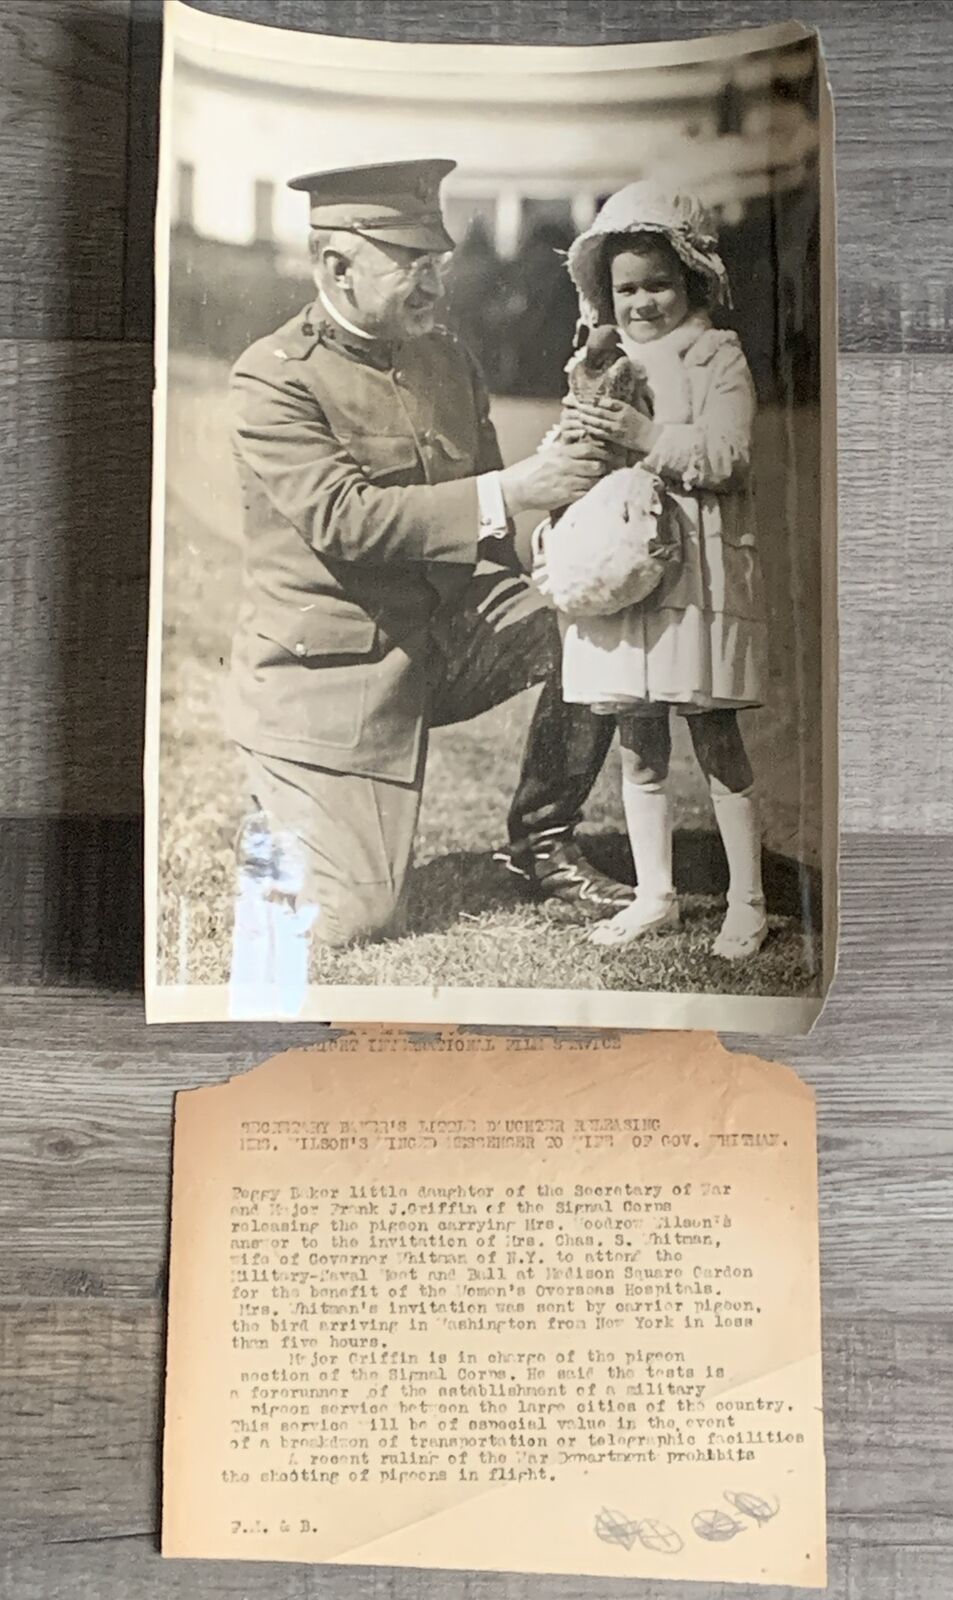 Vtg Press Photo ~1915 Child Carrier Pigeon Military - Naval Ball Invitation WWI